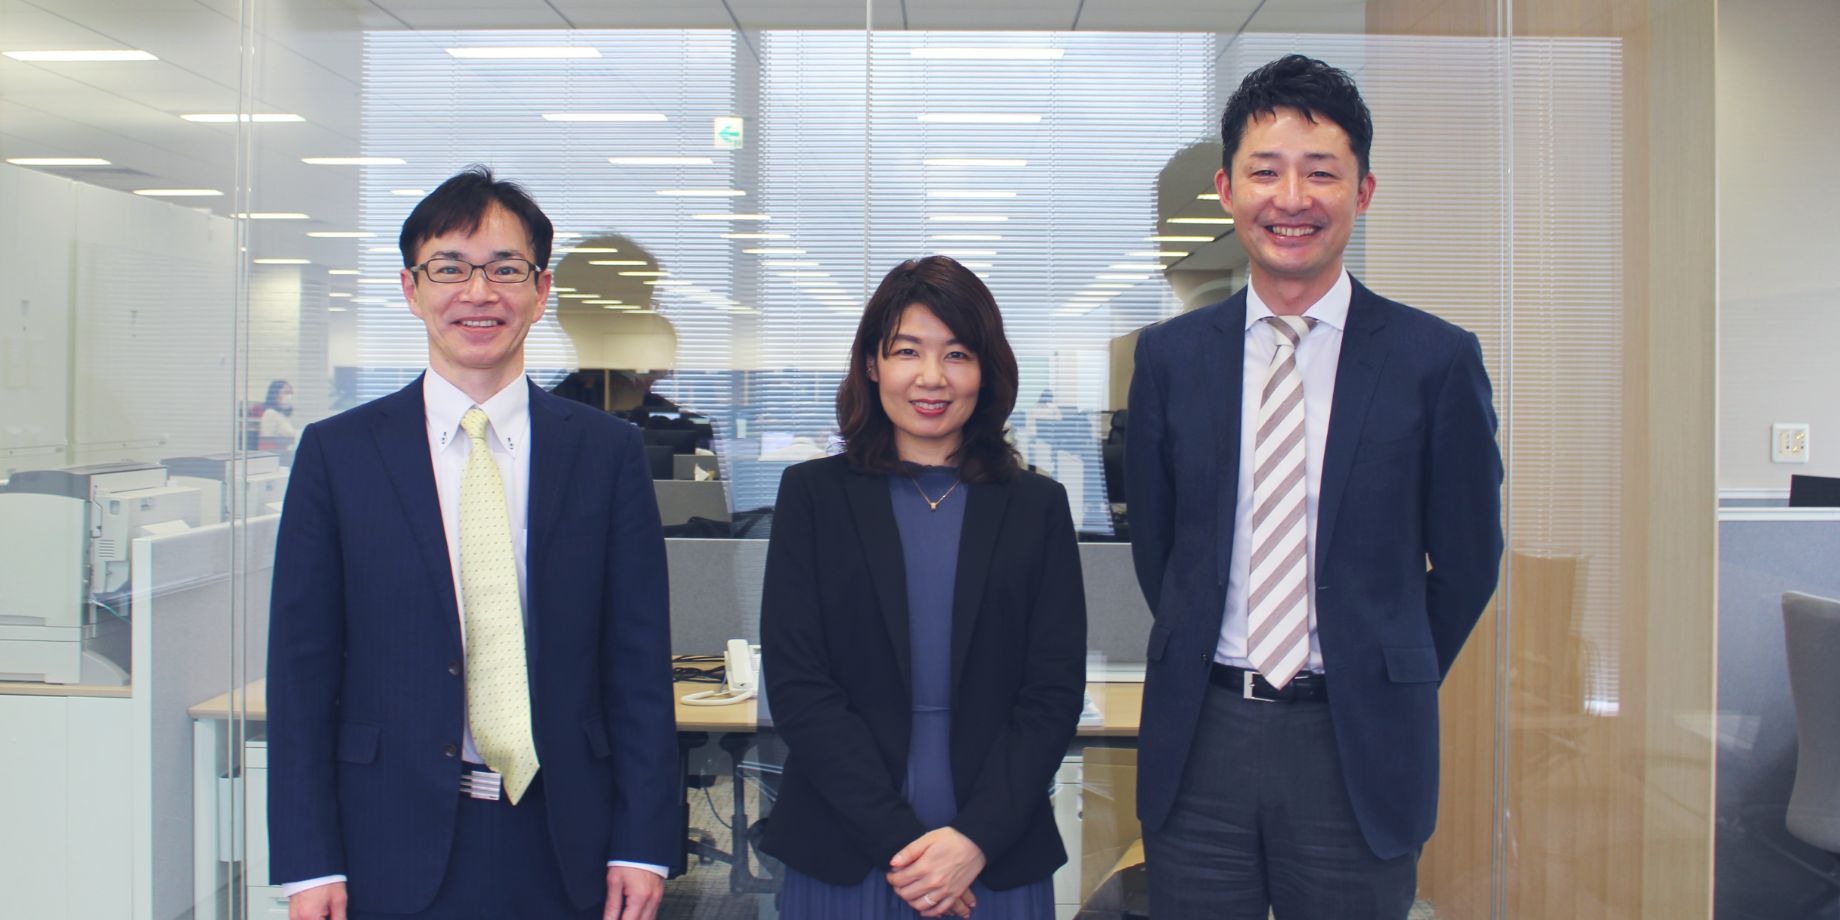 From left to right: Yoshihiko Muraoka, Shiho Tamaki and Makoto Sato